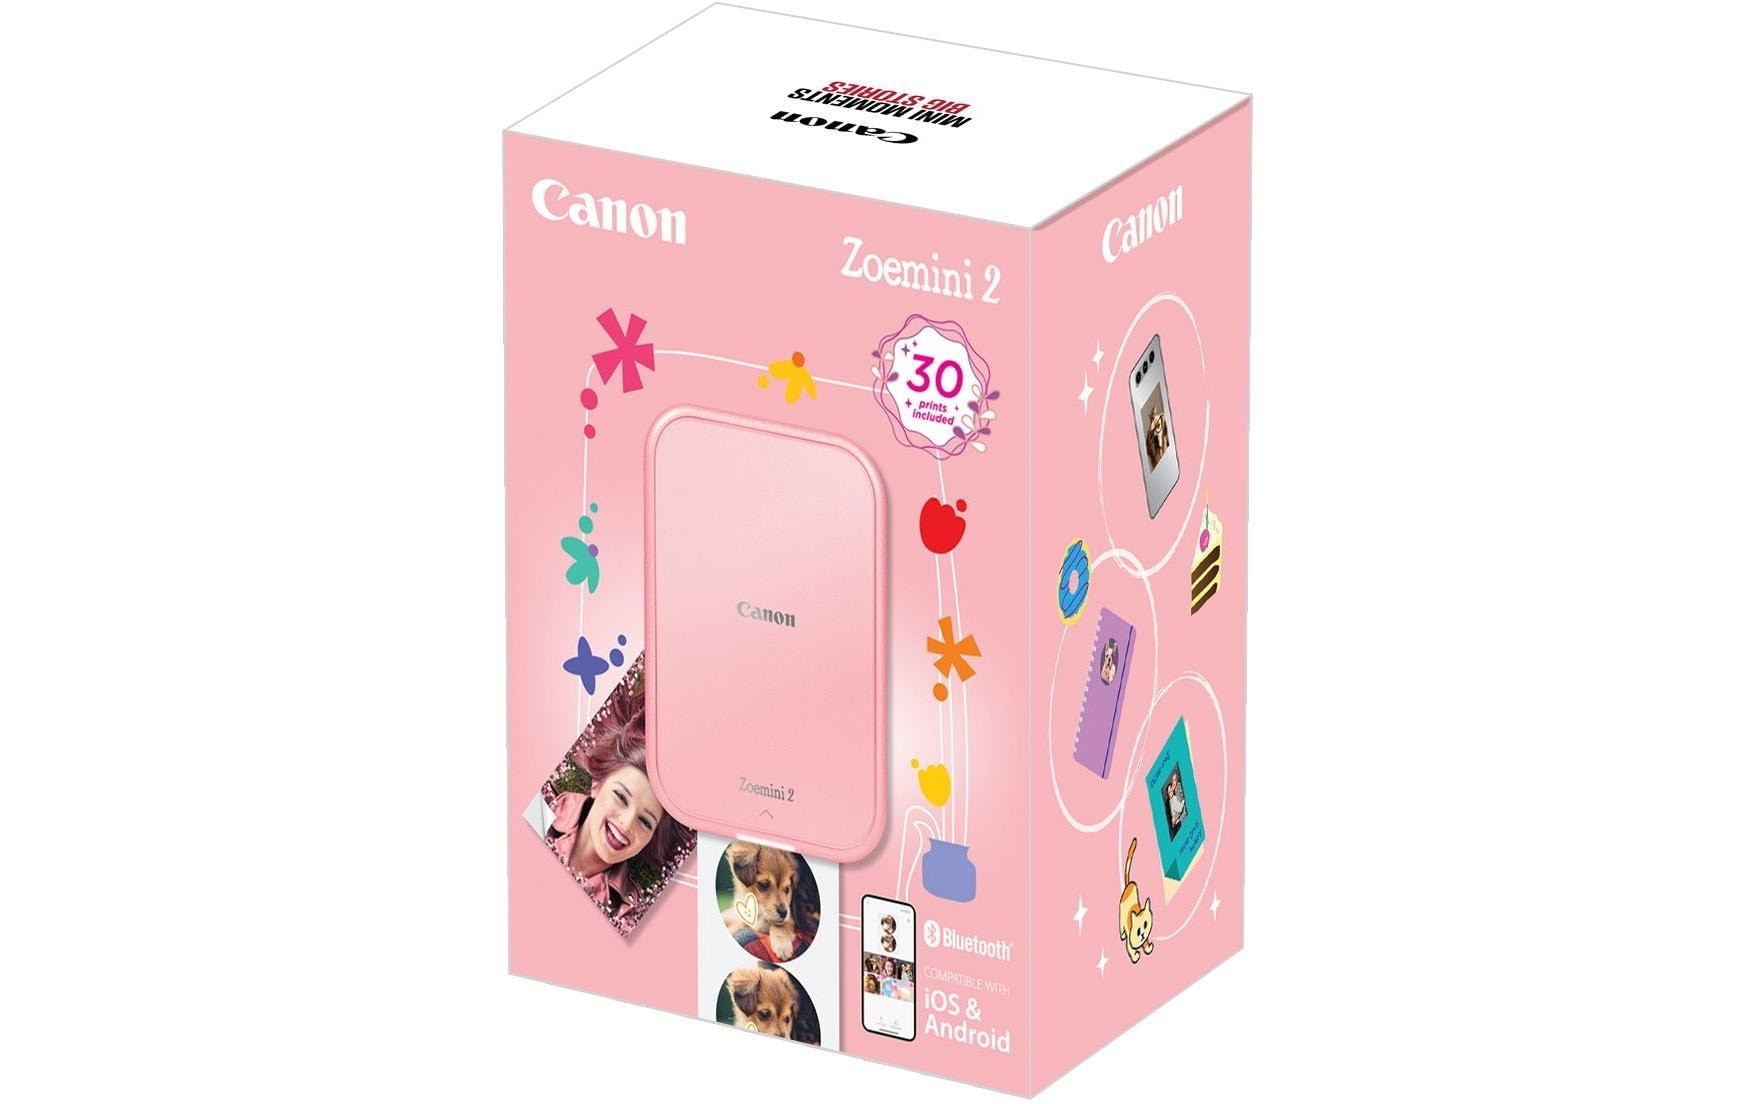 Fotodrucker »Zoemini 2 Rosé-Goldfarben + 30 Fotopapiere + Tasche«